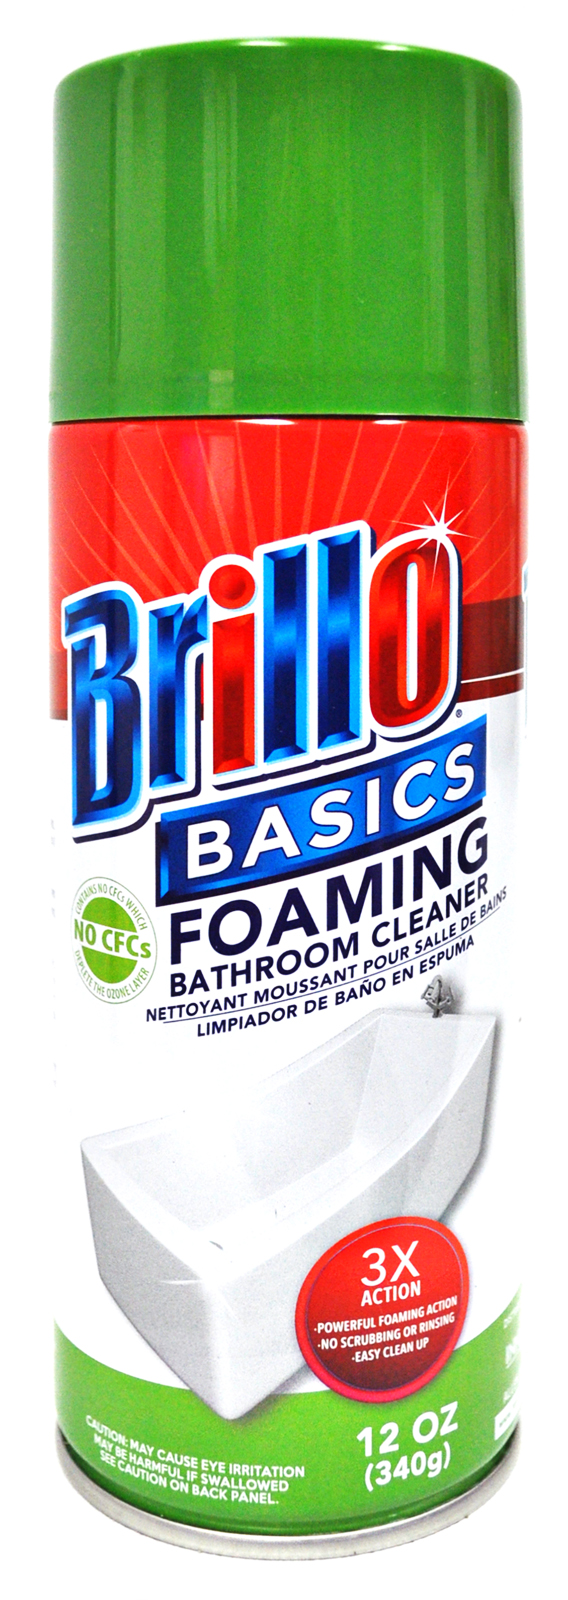 Brillo Basics Foaming Bathroom Cleaner 12 Oz